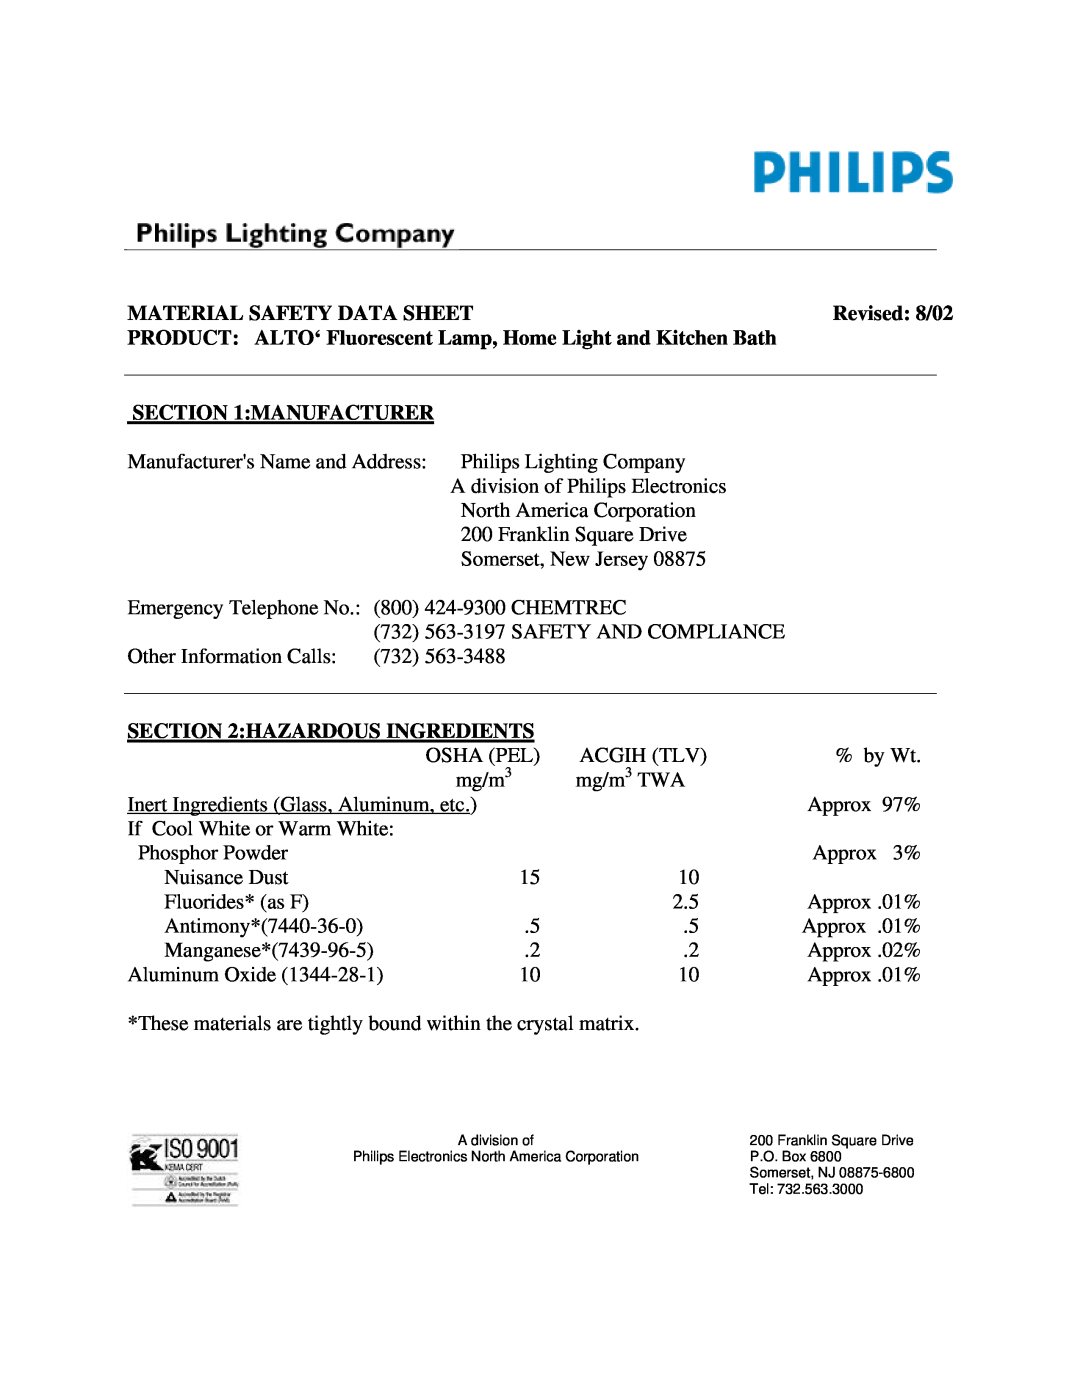 Philips S06-01001 manual Material Safety Data Sheet, Manufacturer, Hazardous Ingredients 